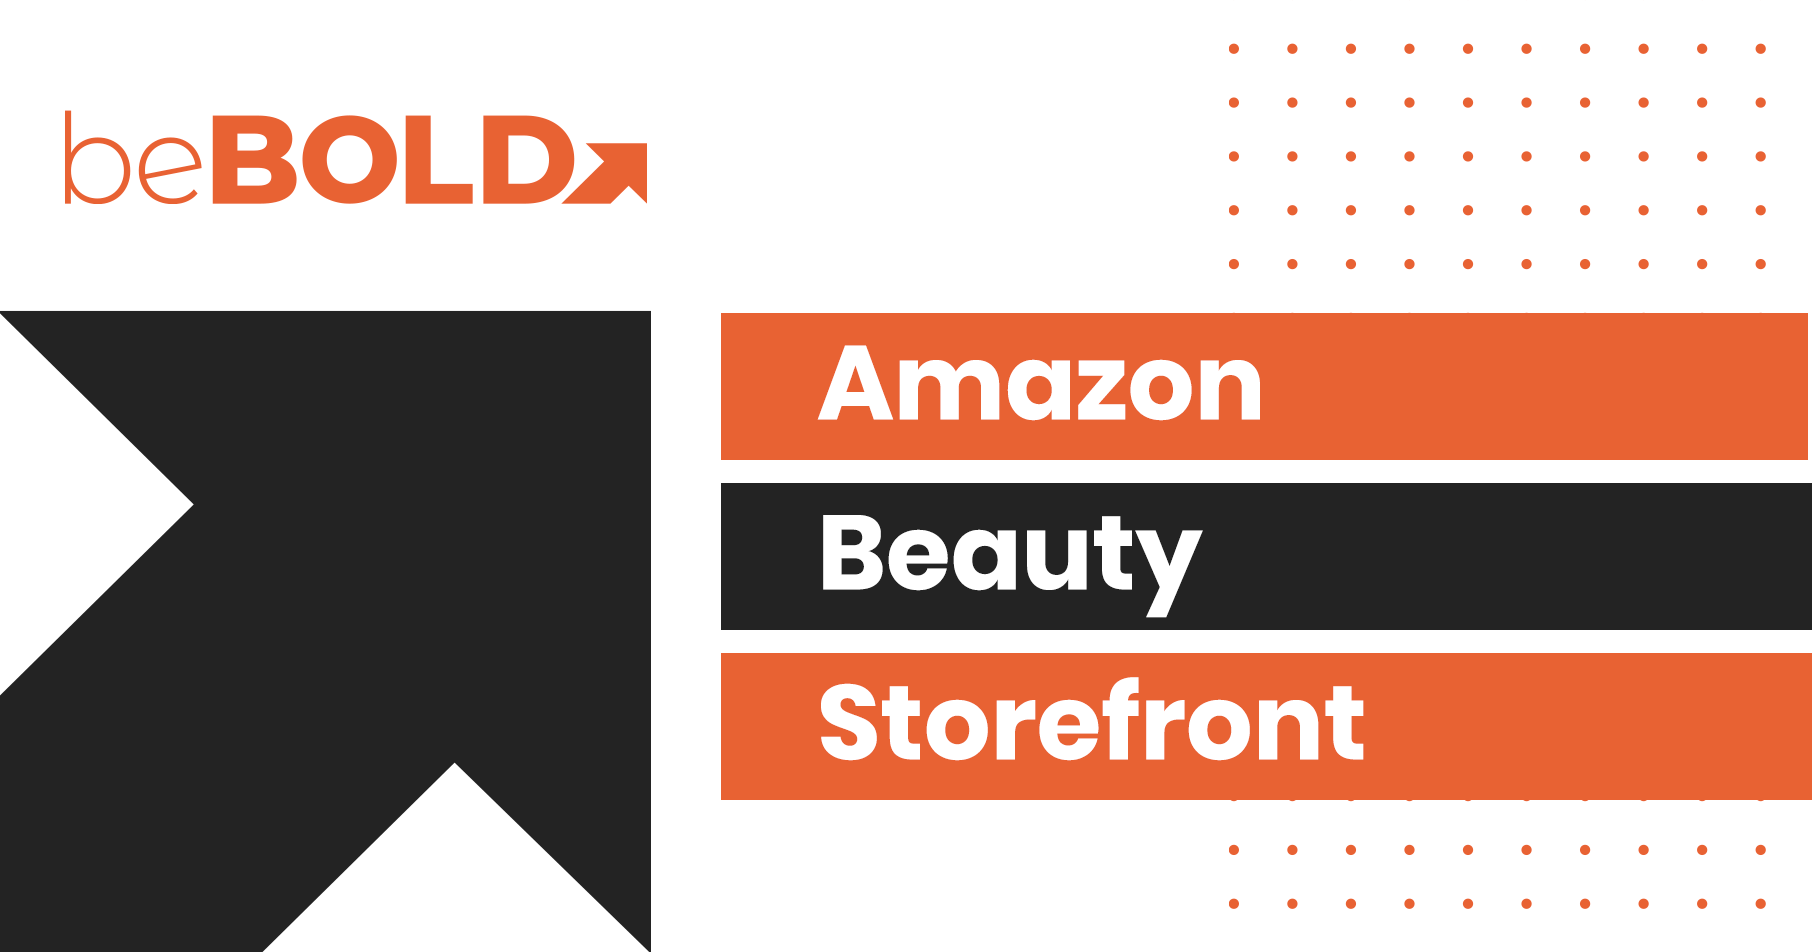 Amazon Beauty Storefront